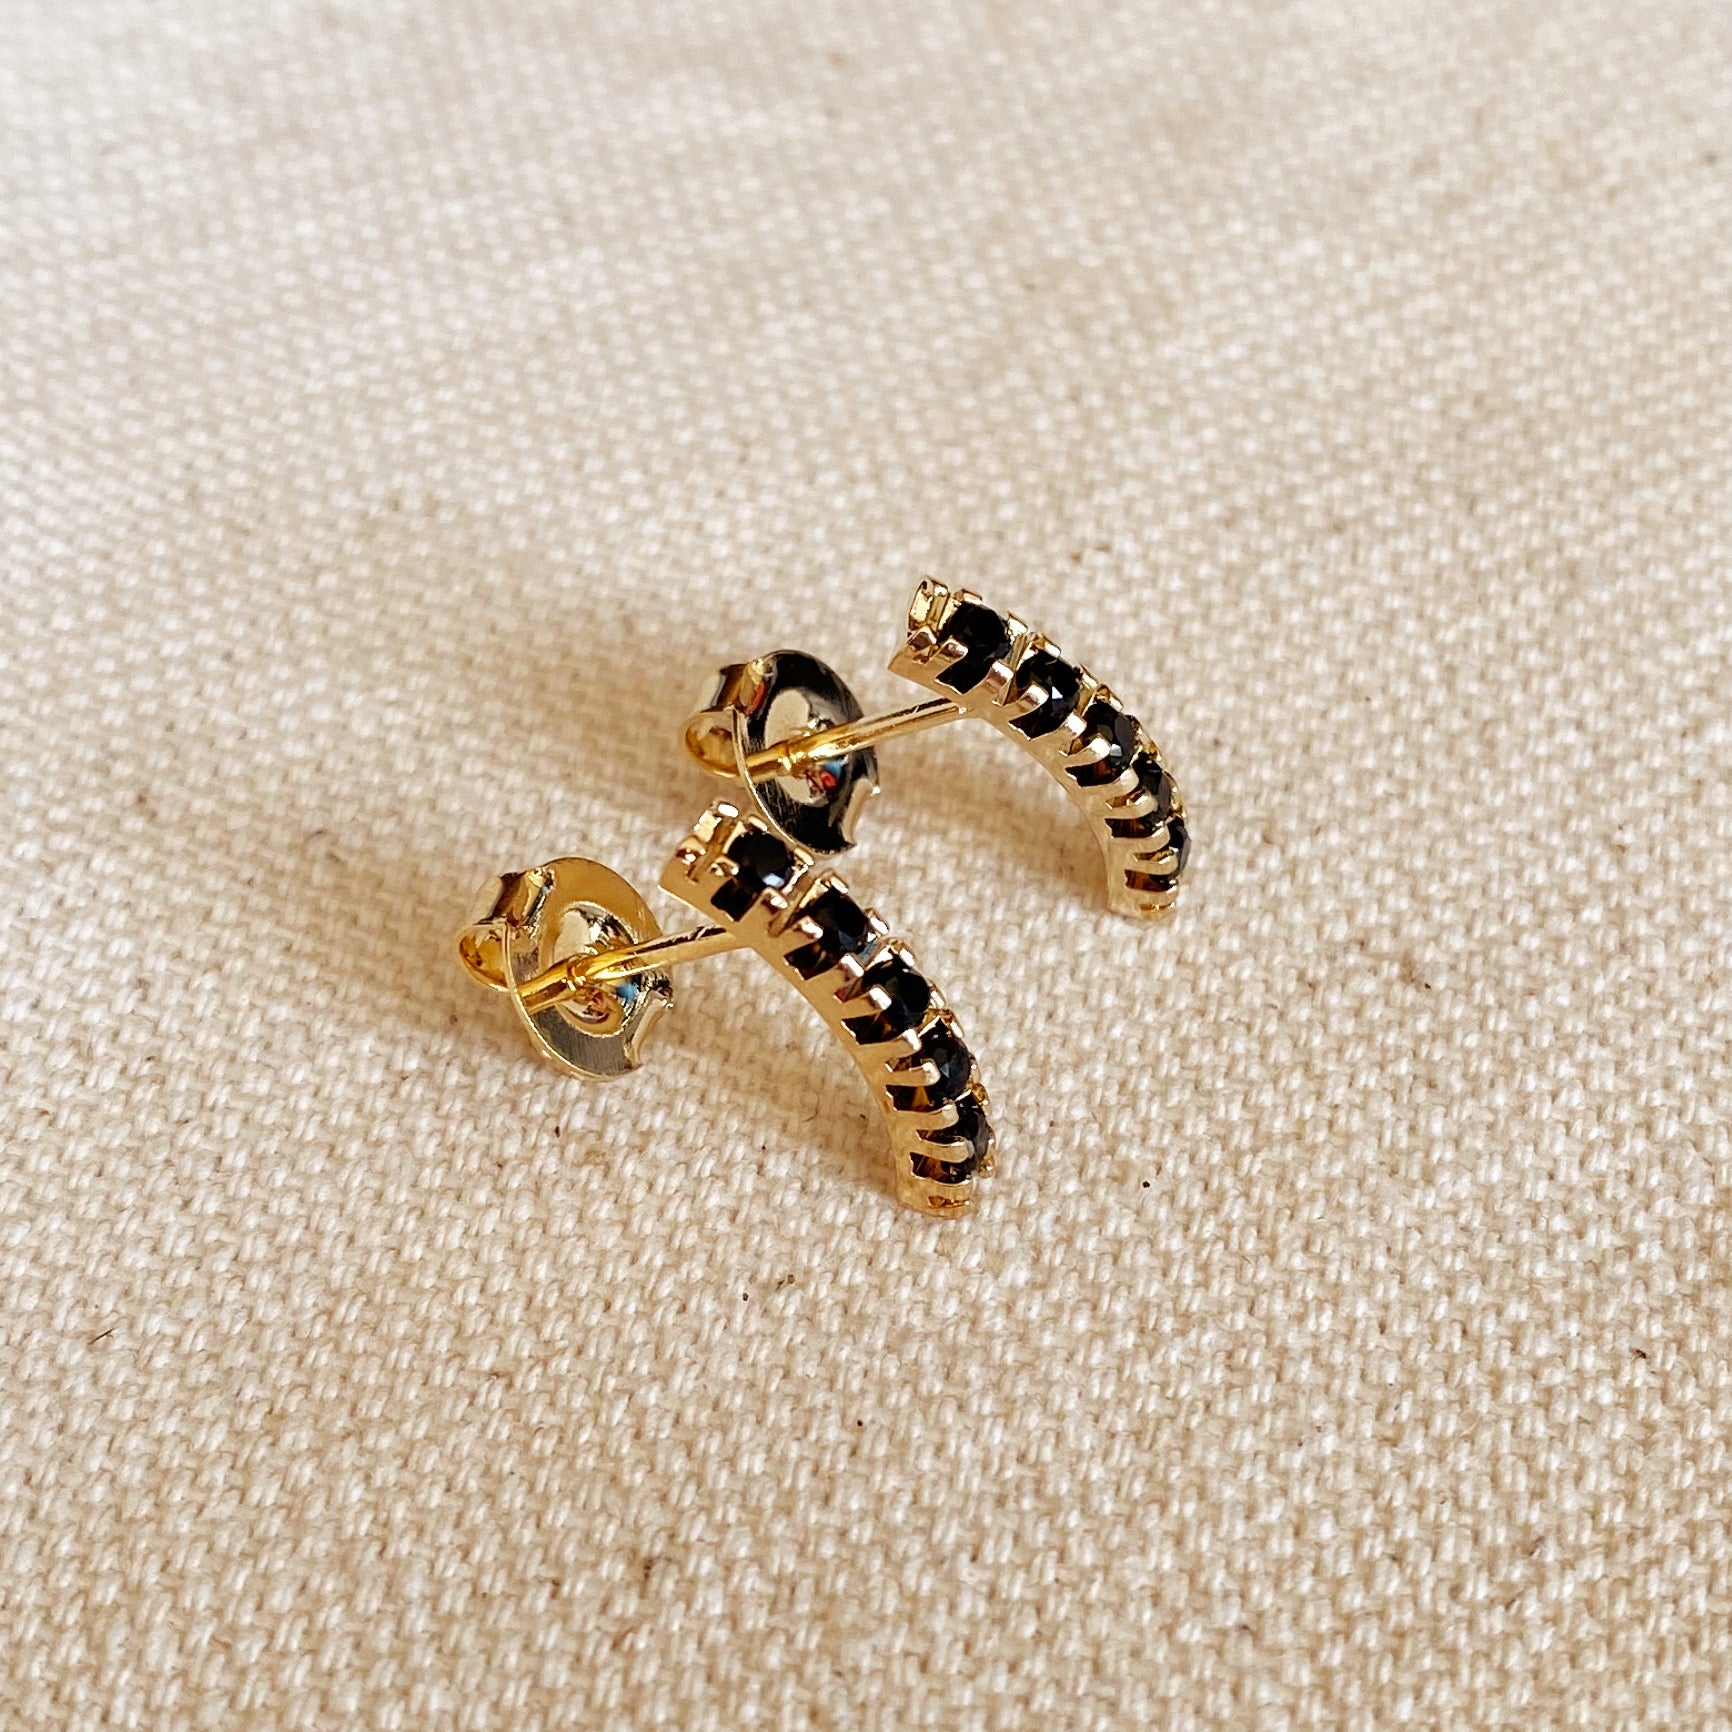 GoldFi 18k Gold Filled Curved Bar Black Crystal Stud Earrings